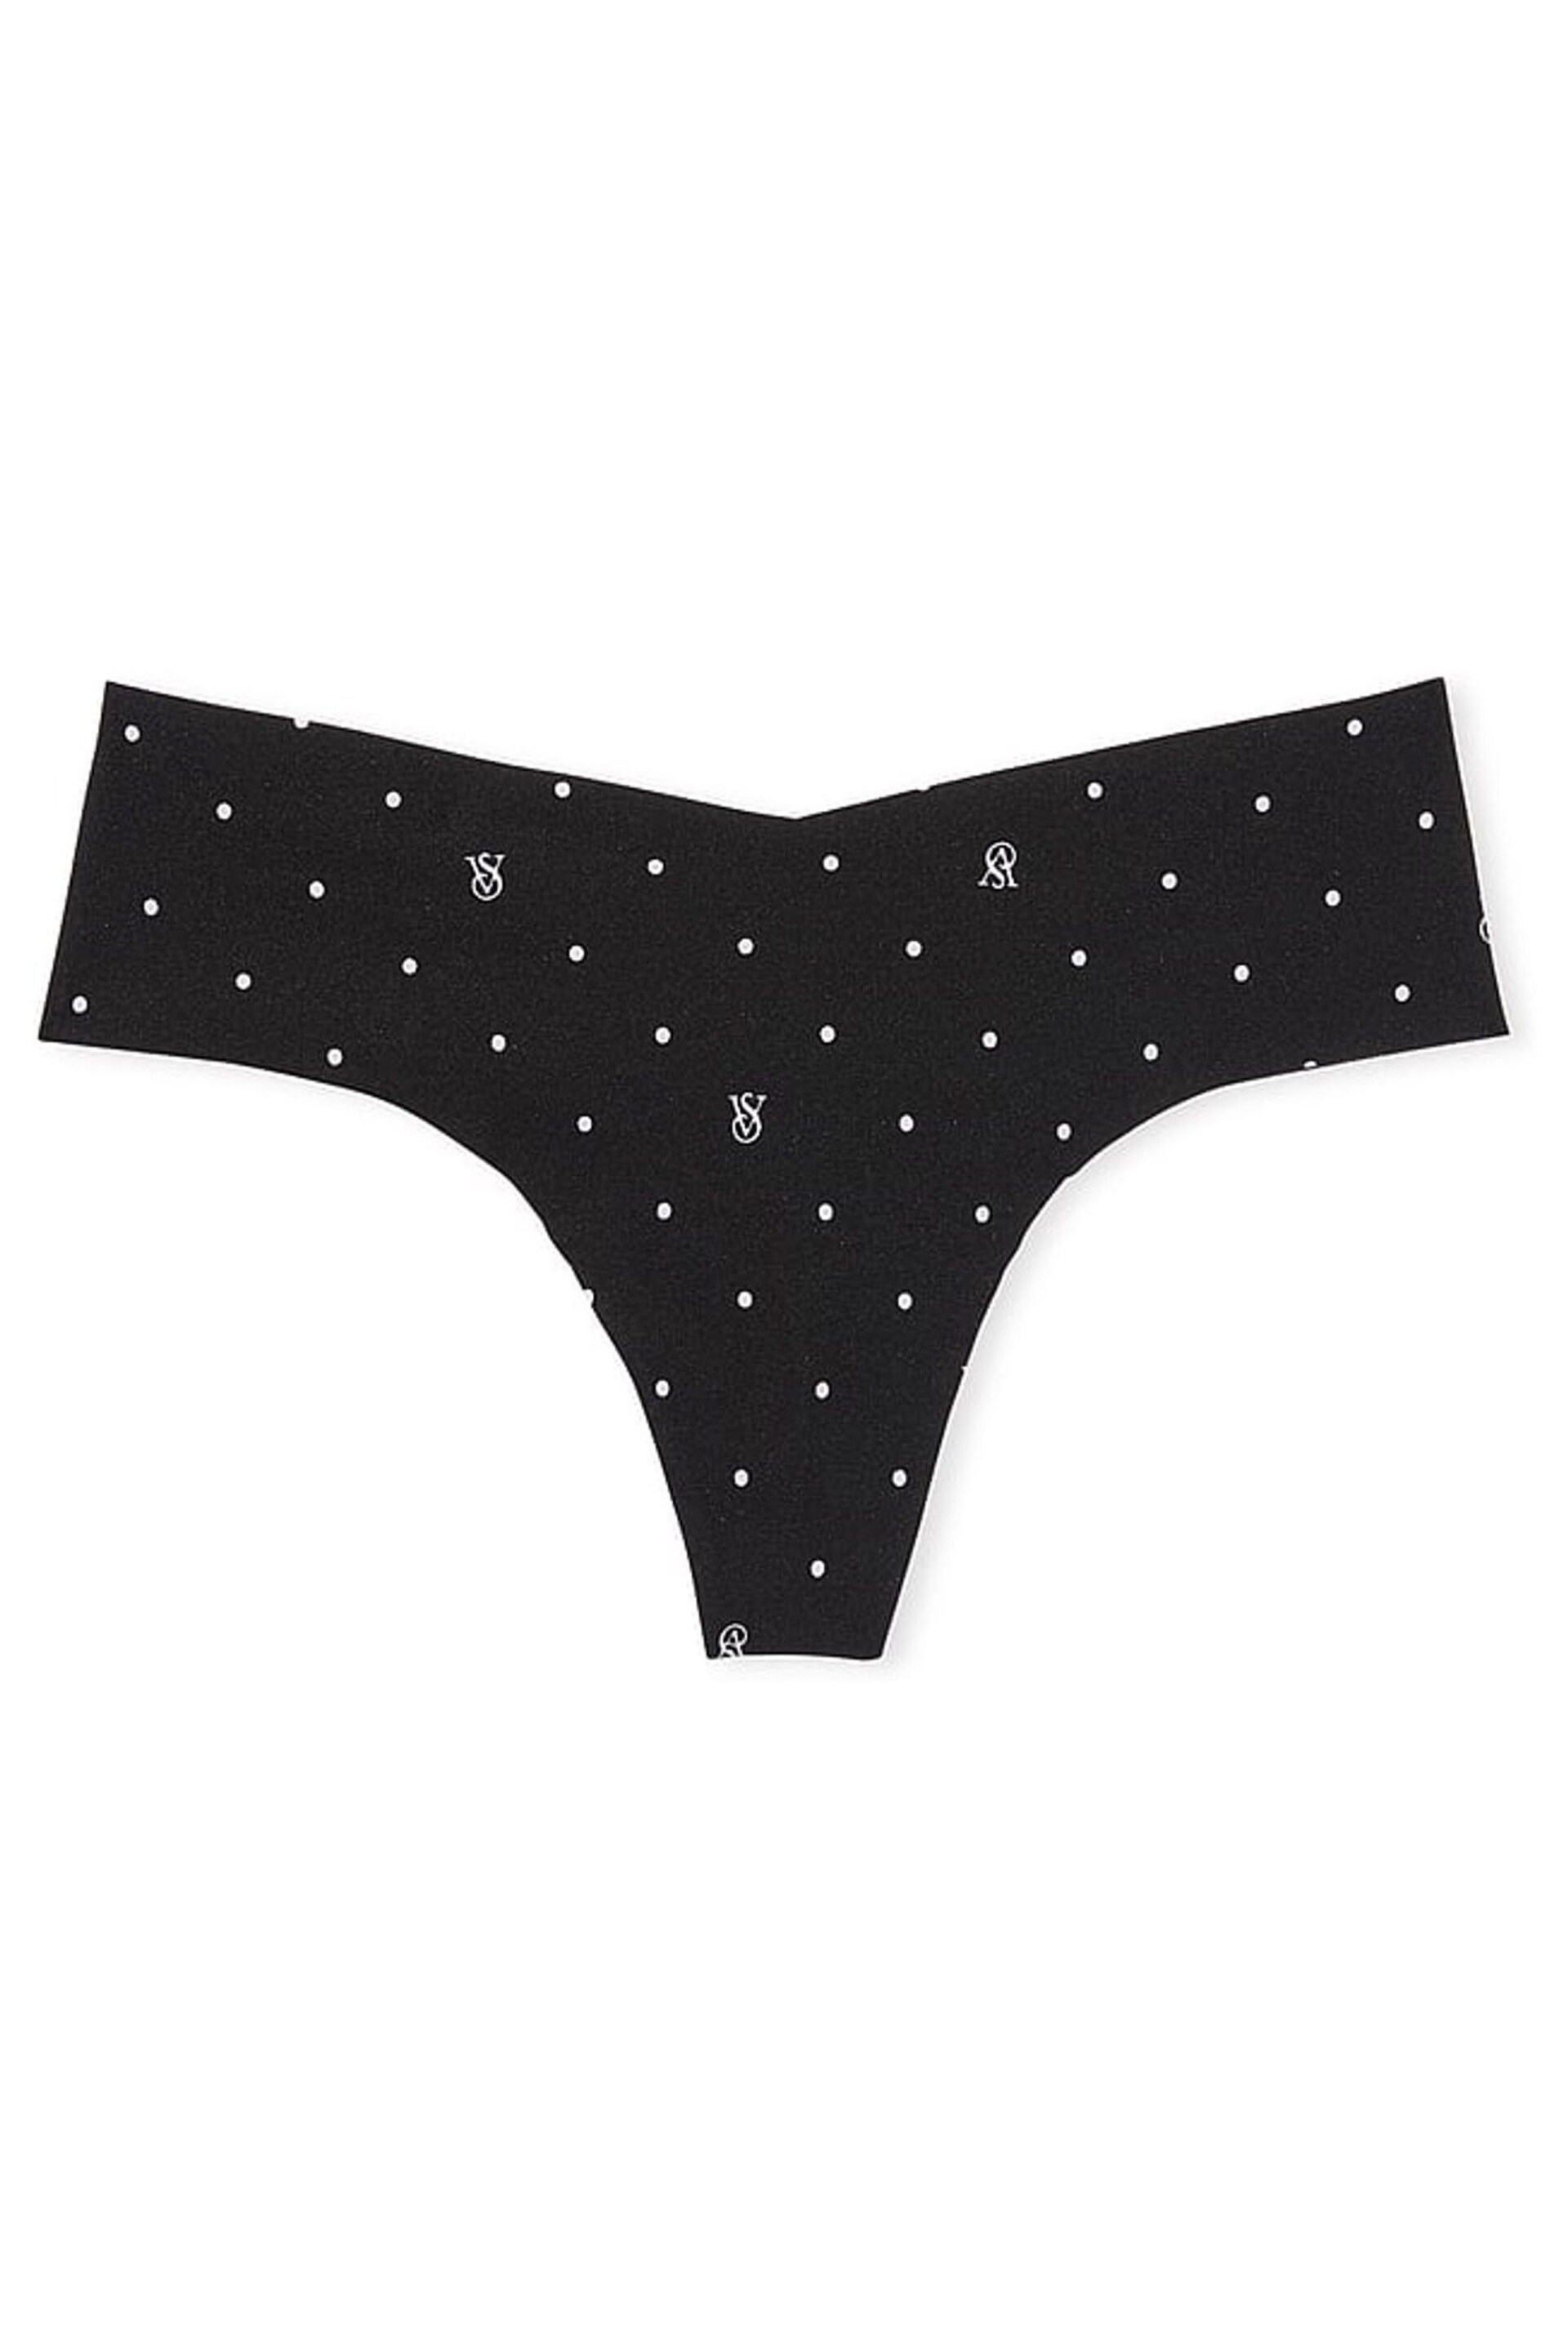 Victoria's Secret Black Dot Logo Thong Knickers - Image 3 of 3